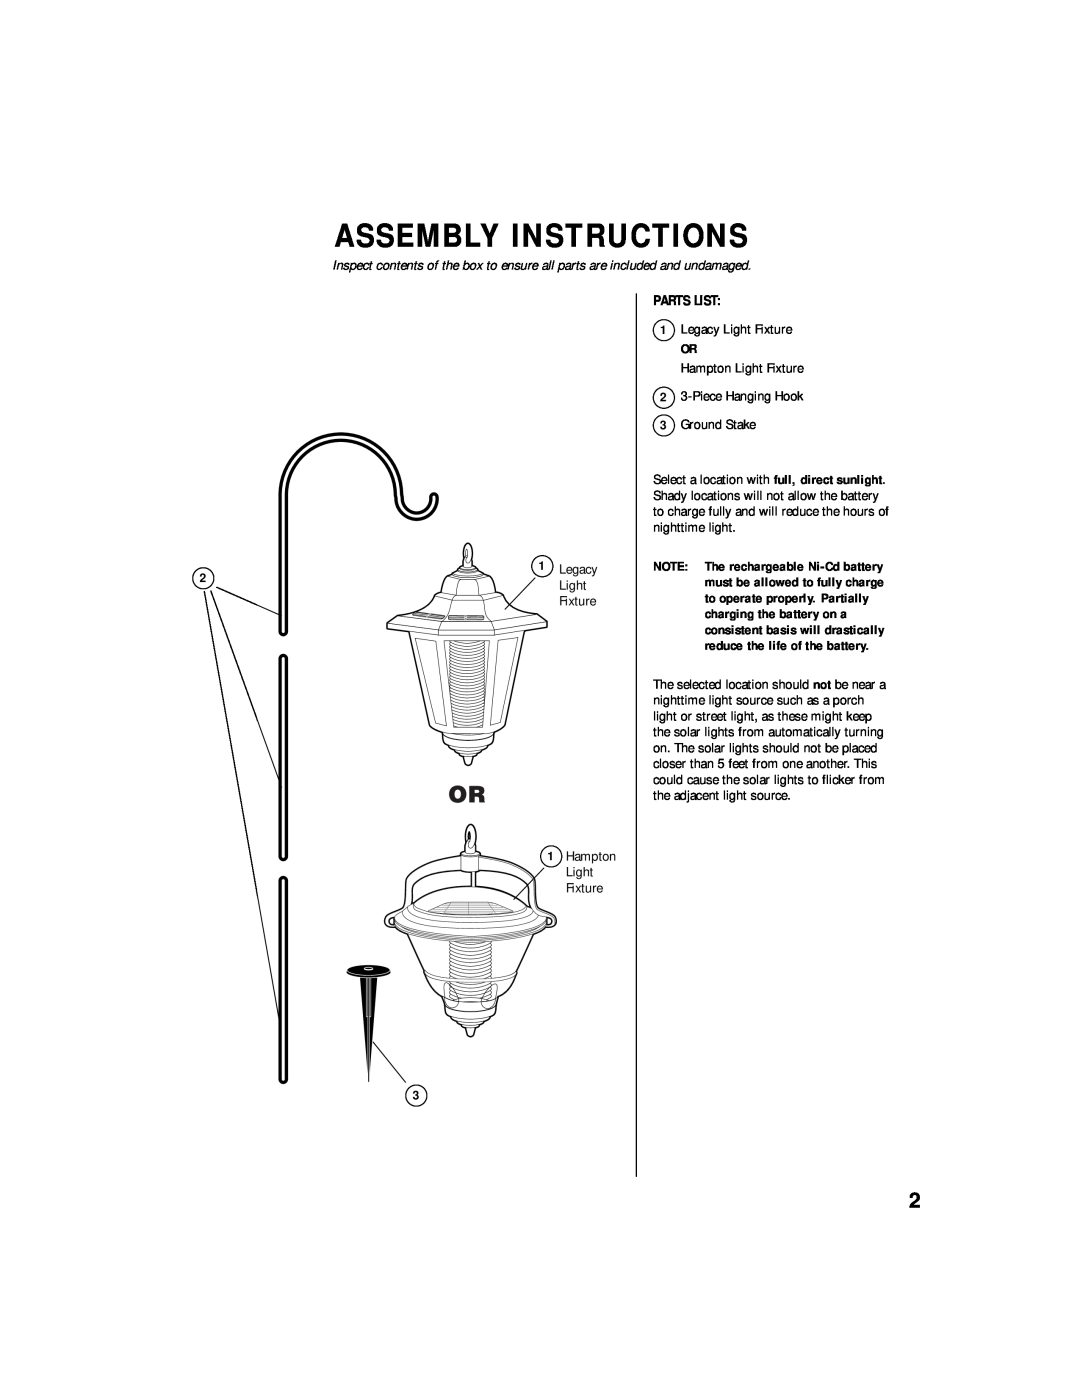 Brinkmann ENDURA owner manual Assembly Instructions, Parts List 